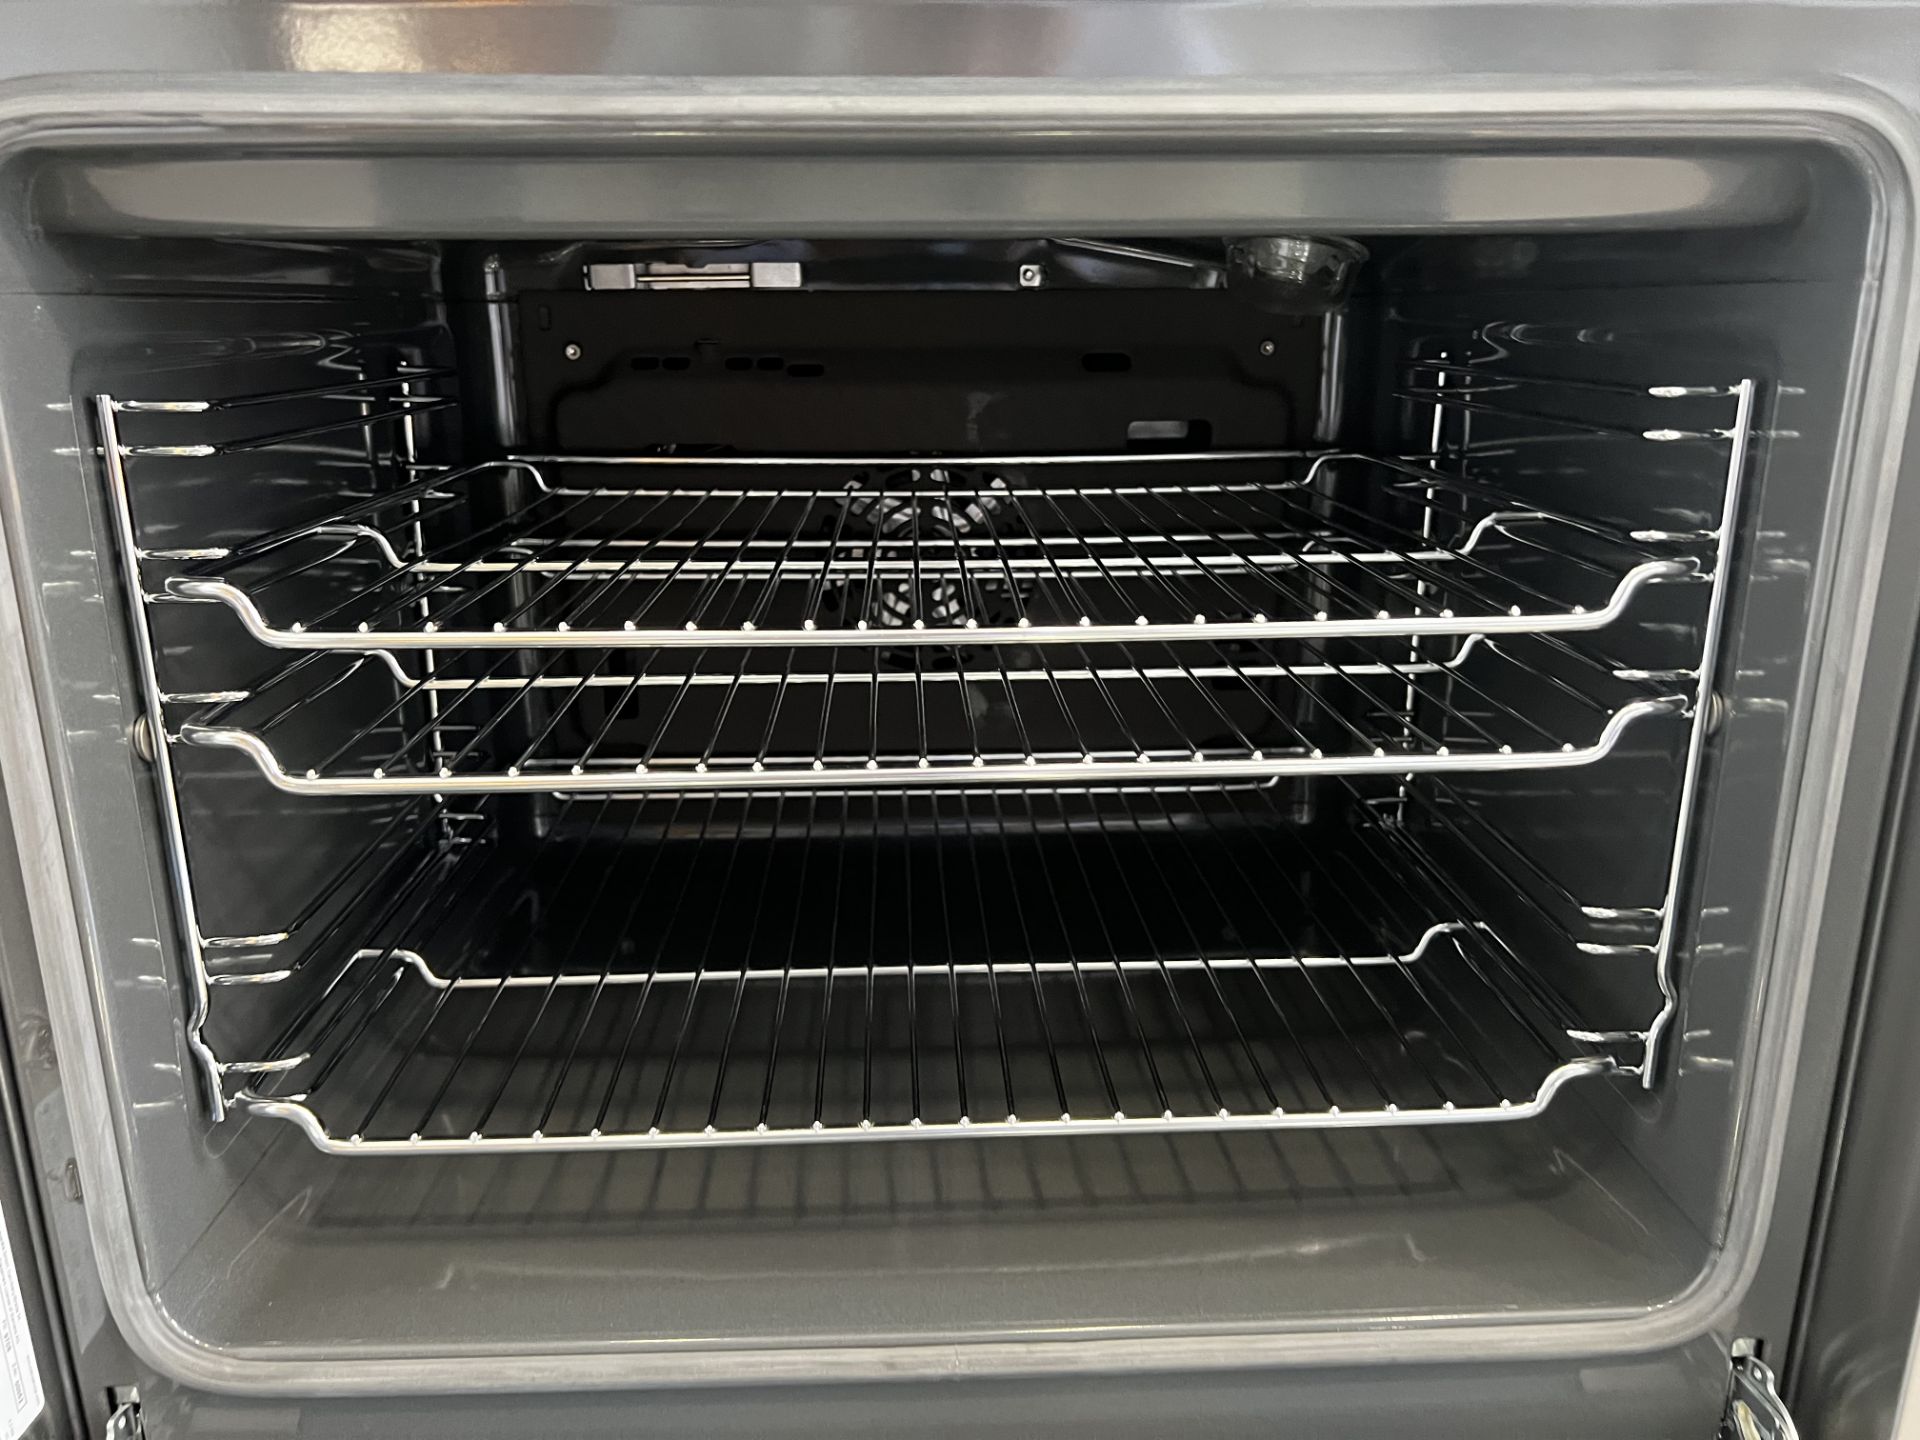 Siemens double oven/grill, type HBB-DP81-7 (built in) - Image 4 of 6